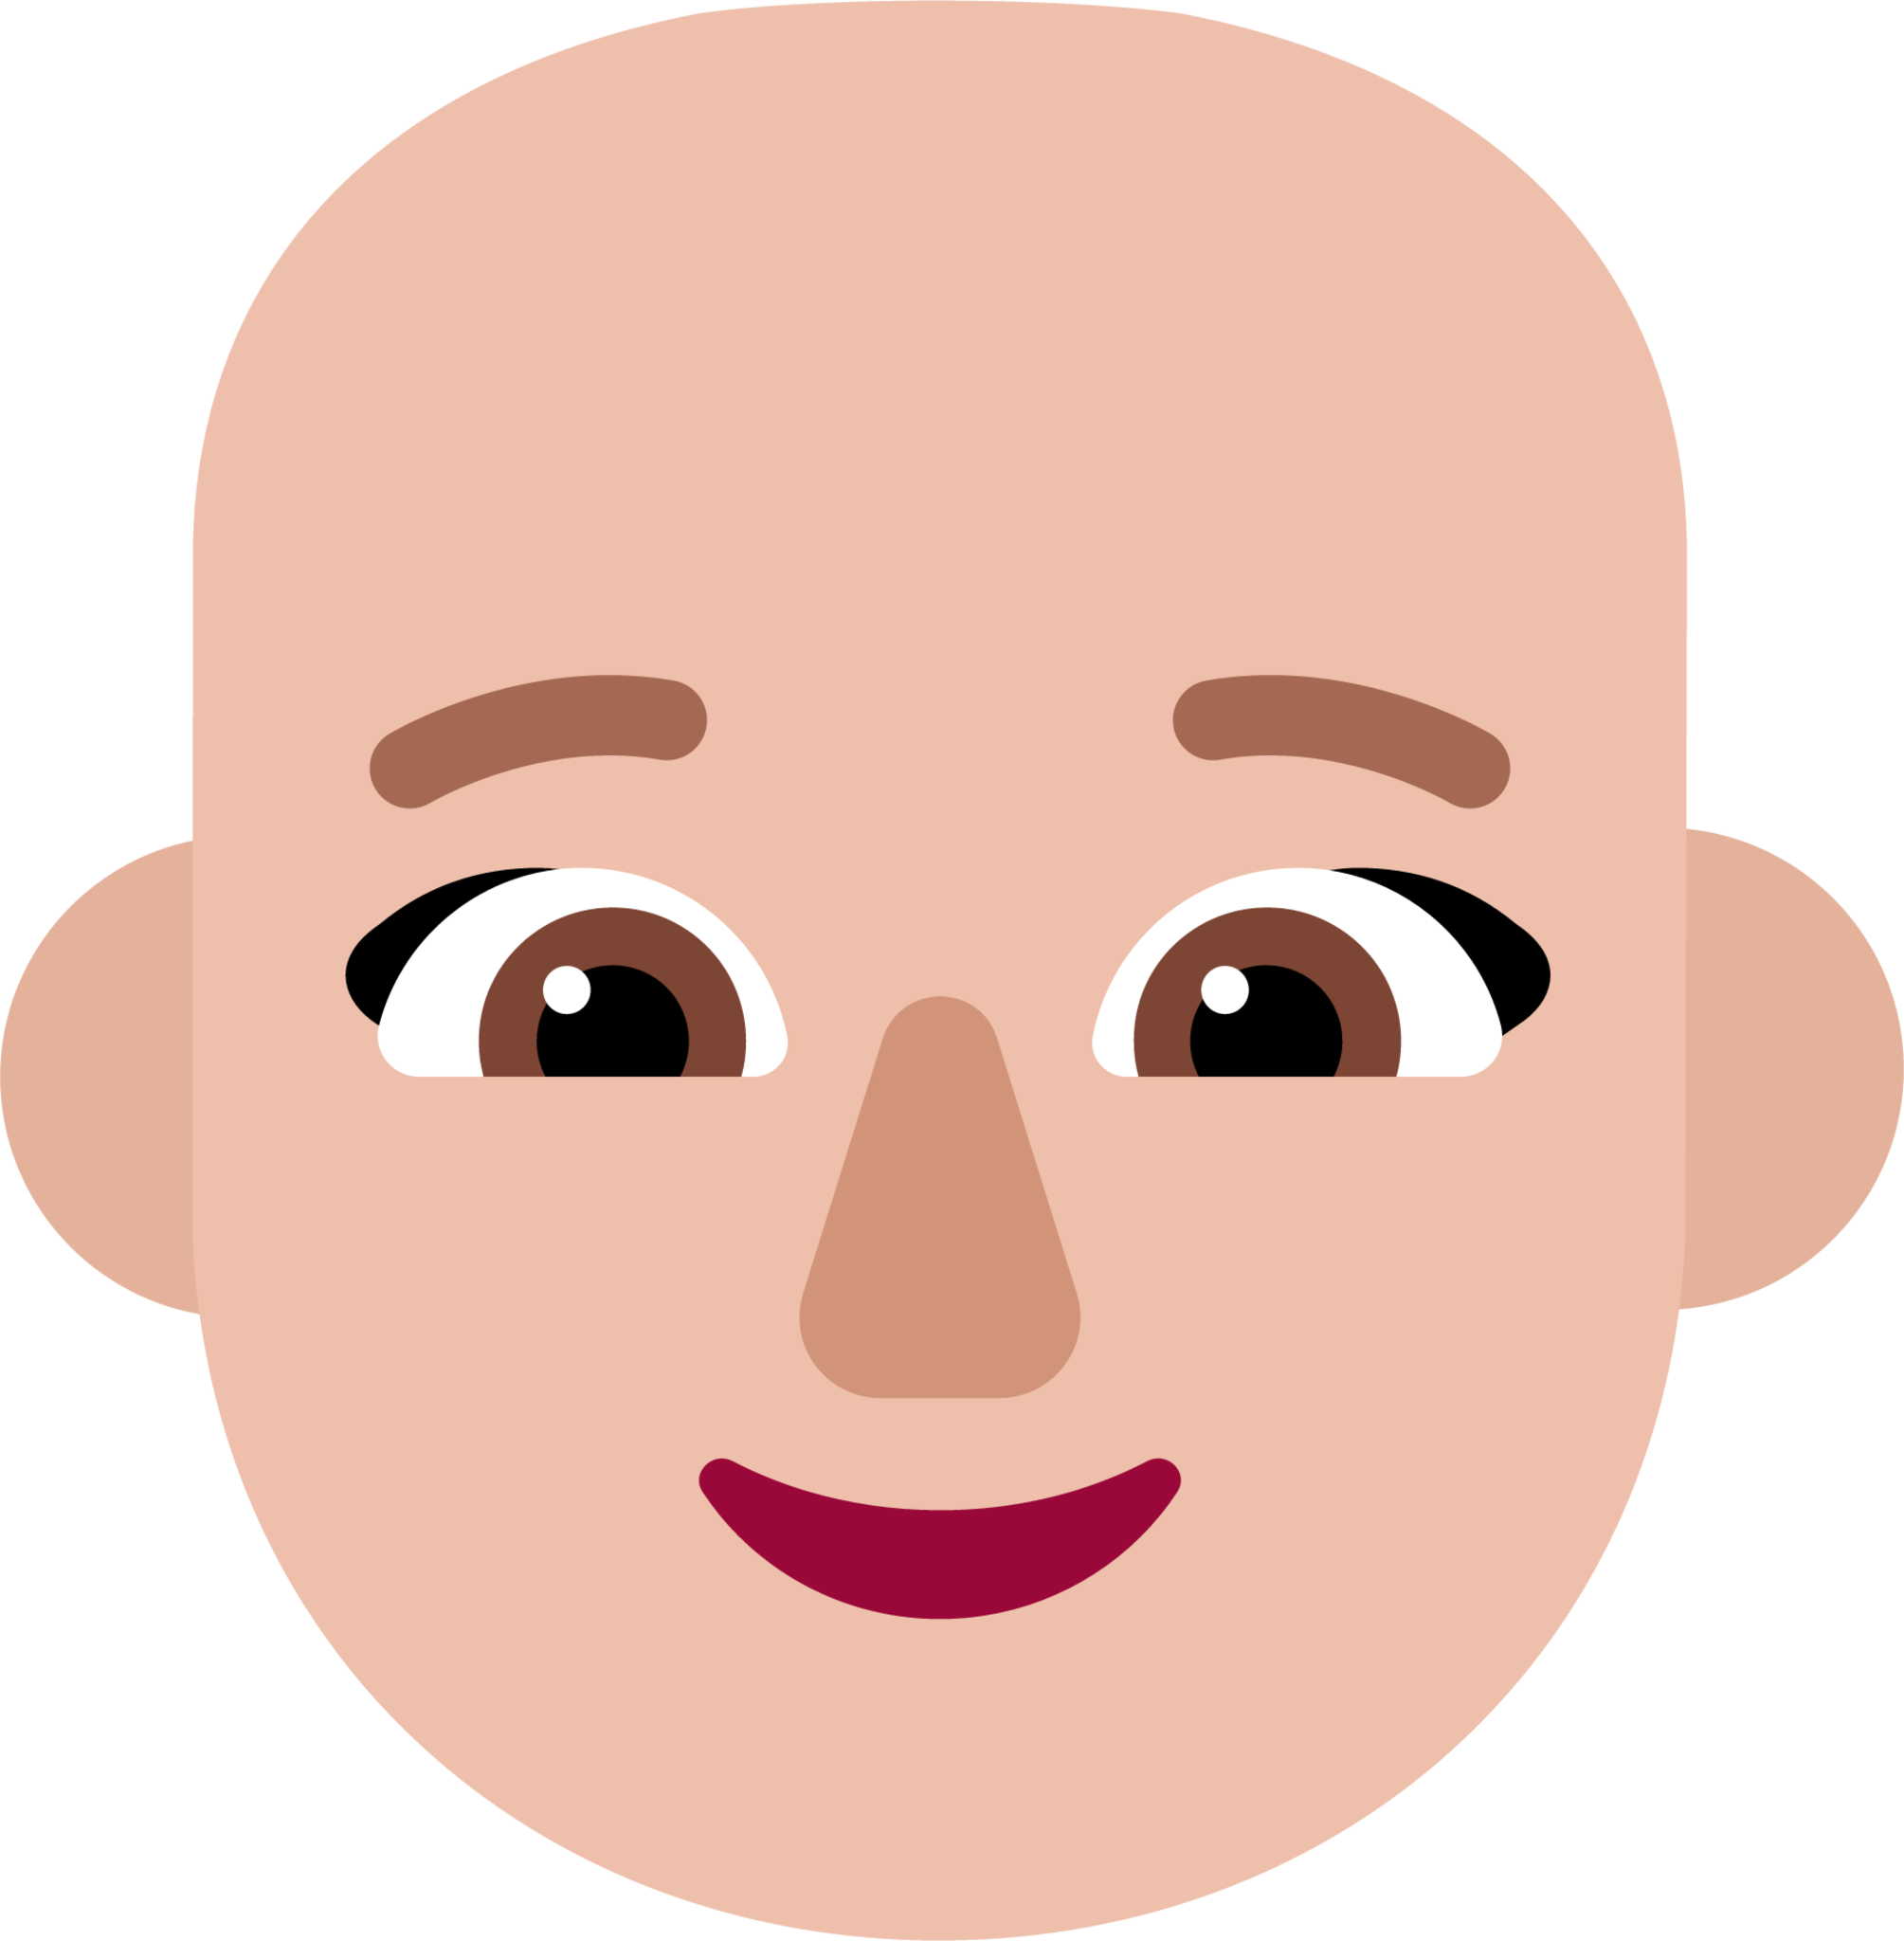 woman bald medium light emoji